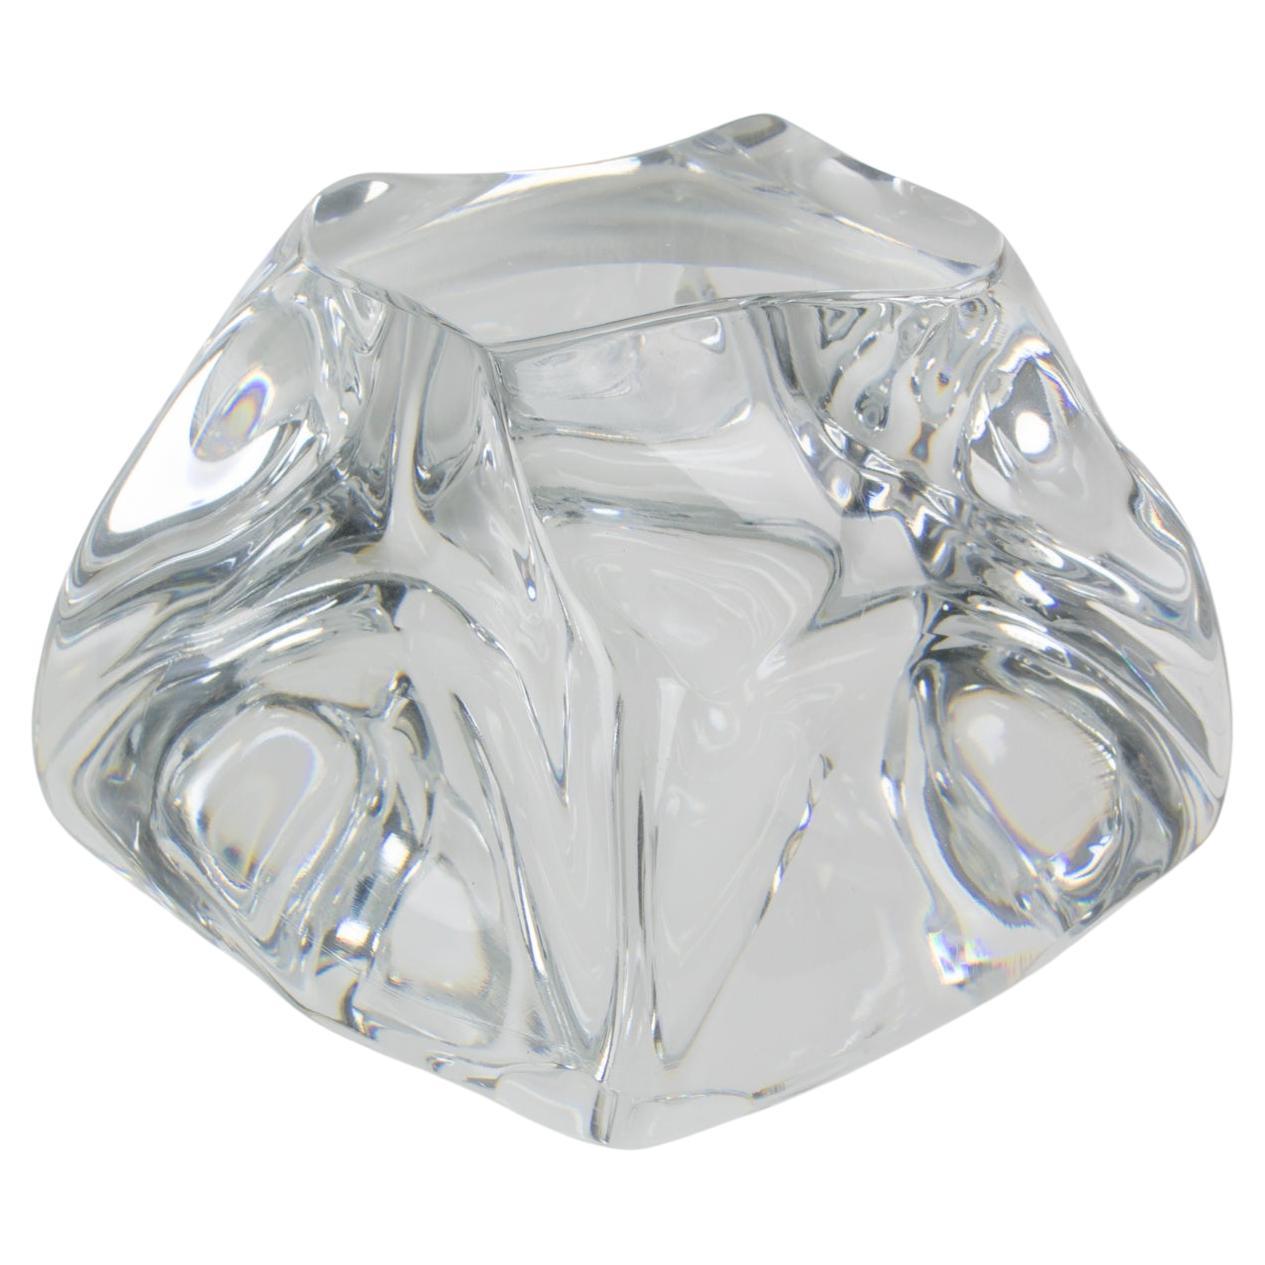 Daum France Crystal Desktop Accessory Paperweight Sculpture For Sale